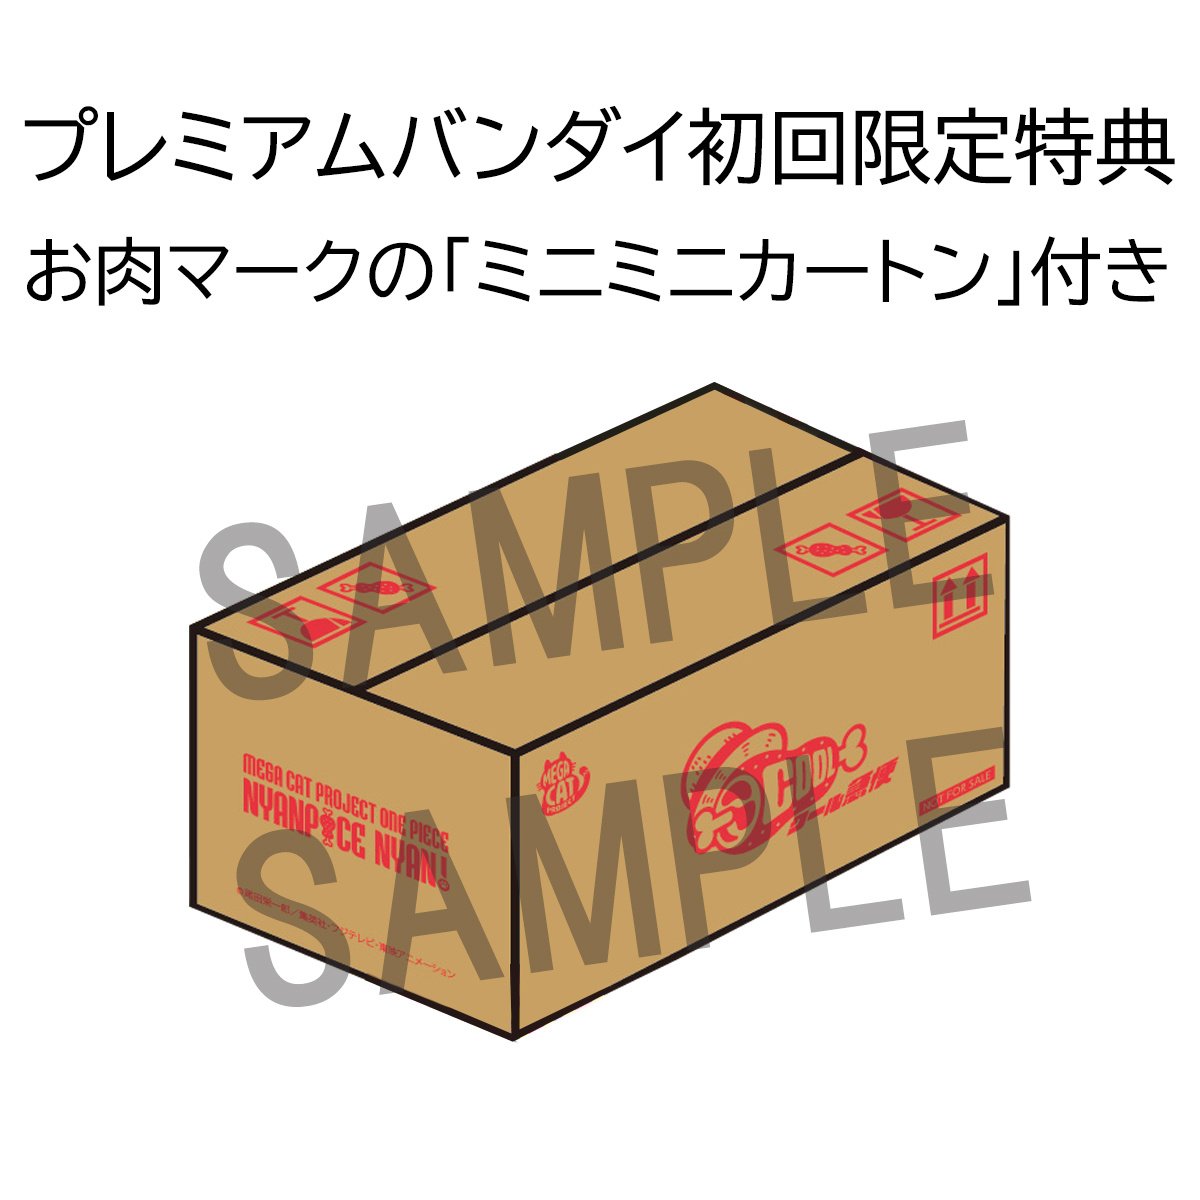 Mega Cat Project One Piece NyanPiece Nyan! Ver. Luffy with Rivals Box Set  w/ Bonus Mini Carton - Tokyo Otaku Mode (TOM)